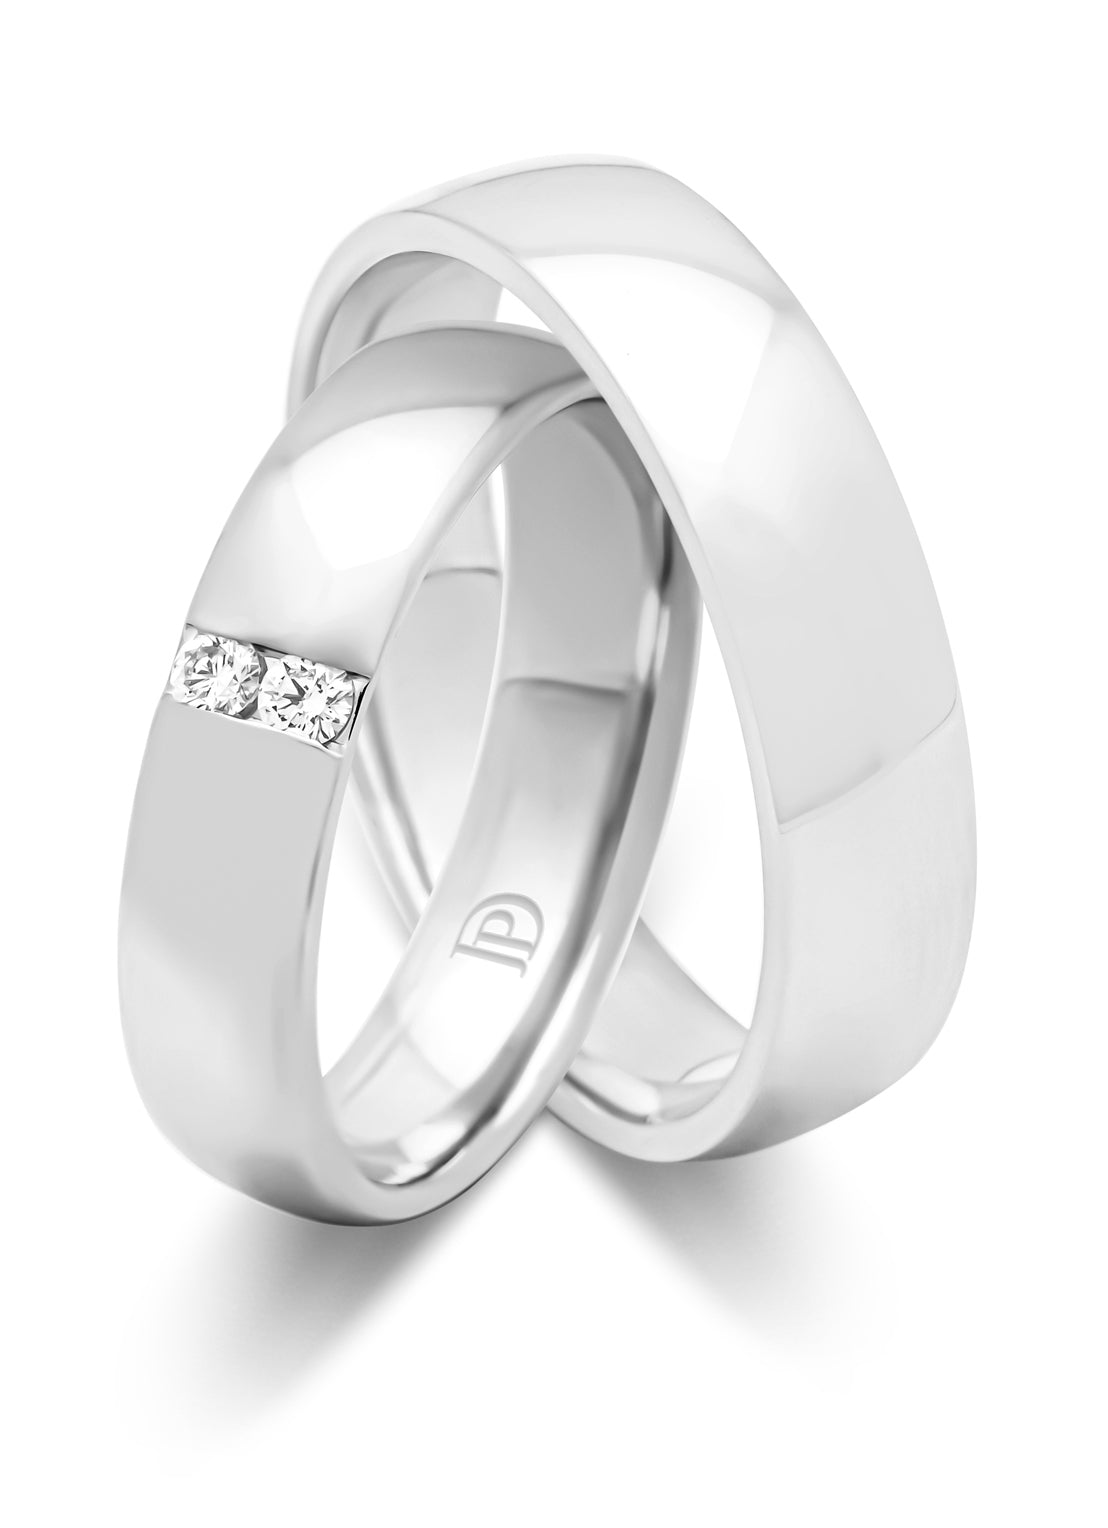 White gold 18 kt wedding ring